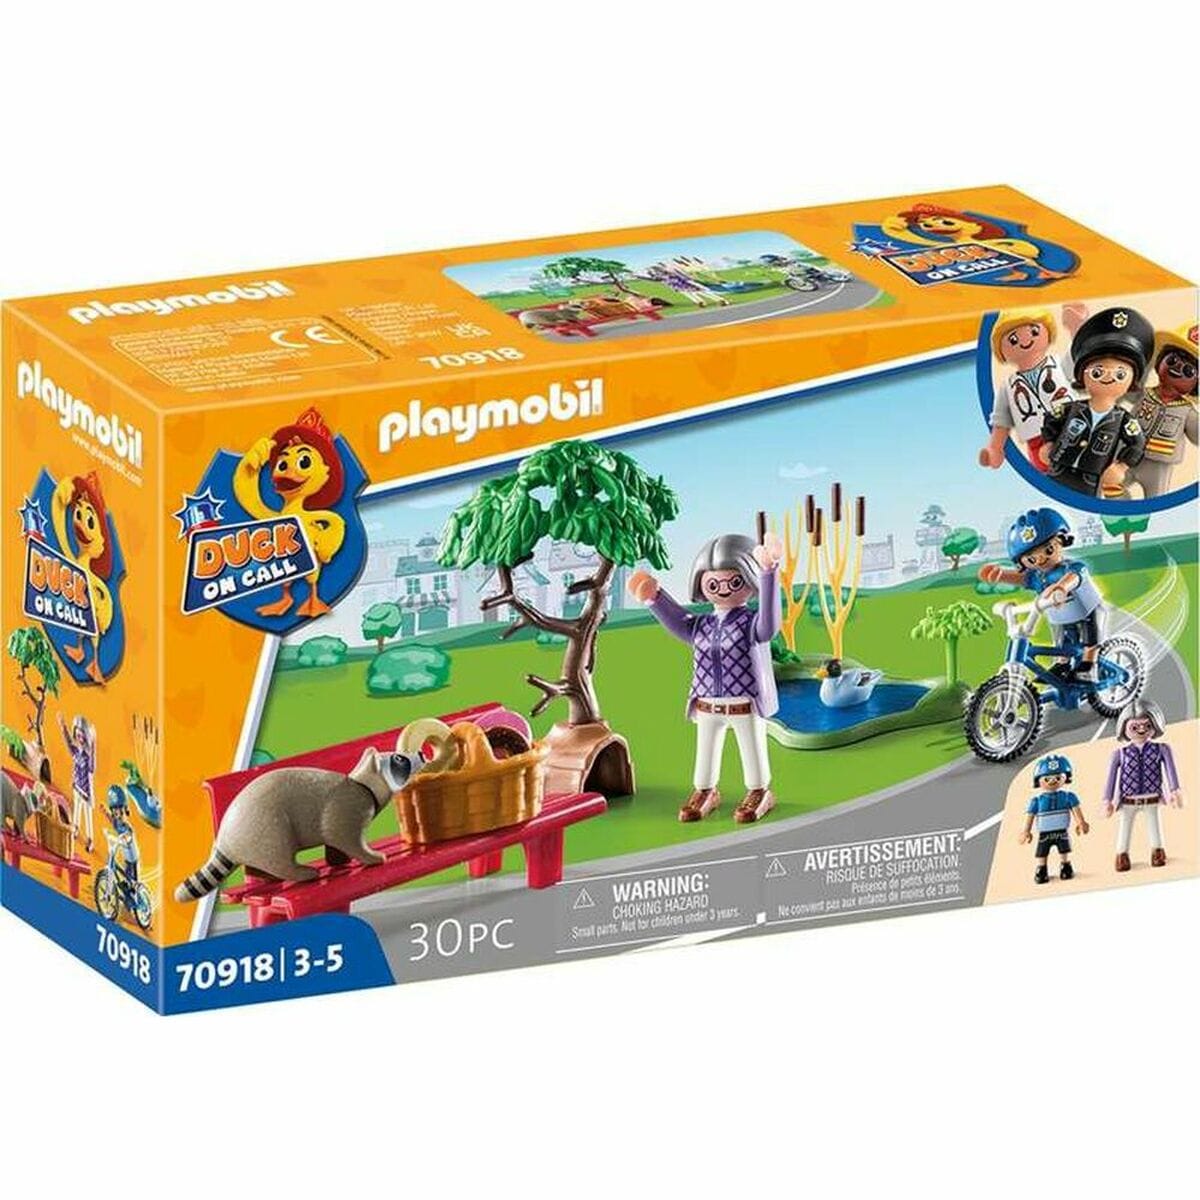 Playmobil Spielzeug | Kostüme > Spielzeug und Spiele > Action-Figuren Playset Playmobil 70918 70918 (30 pcs)